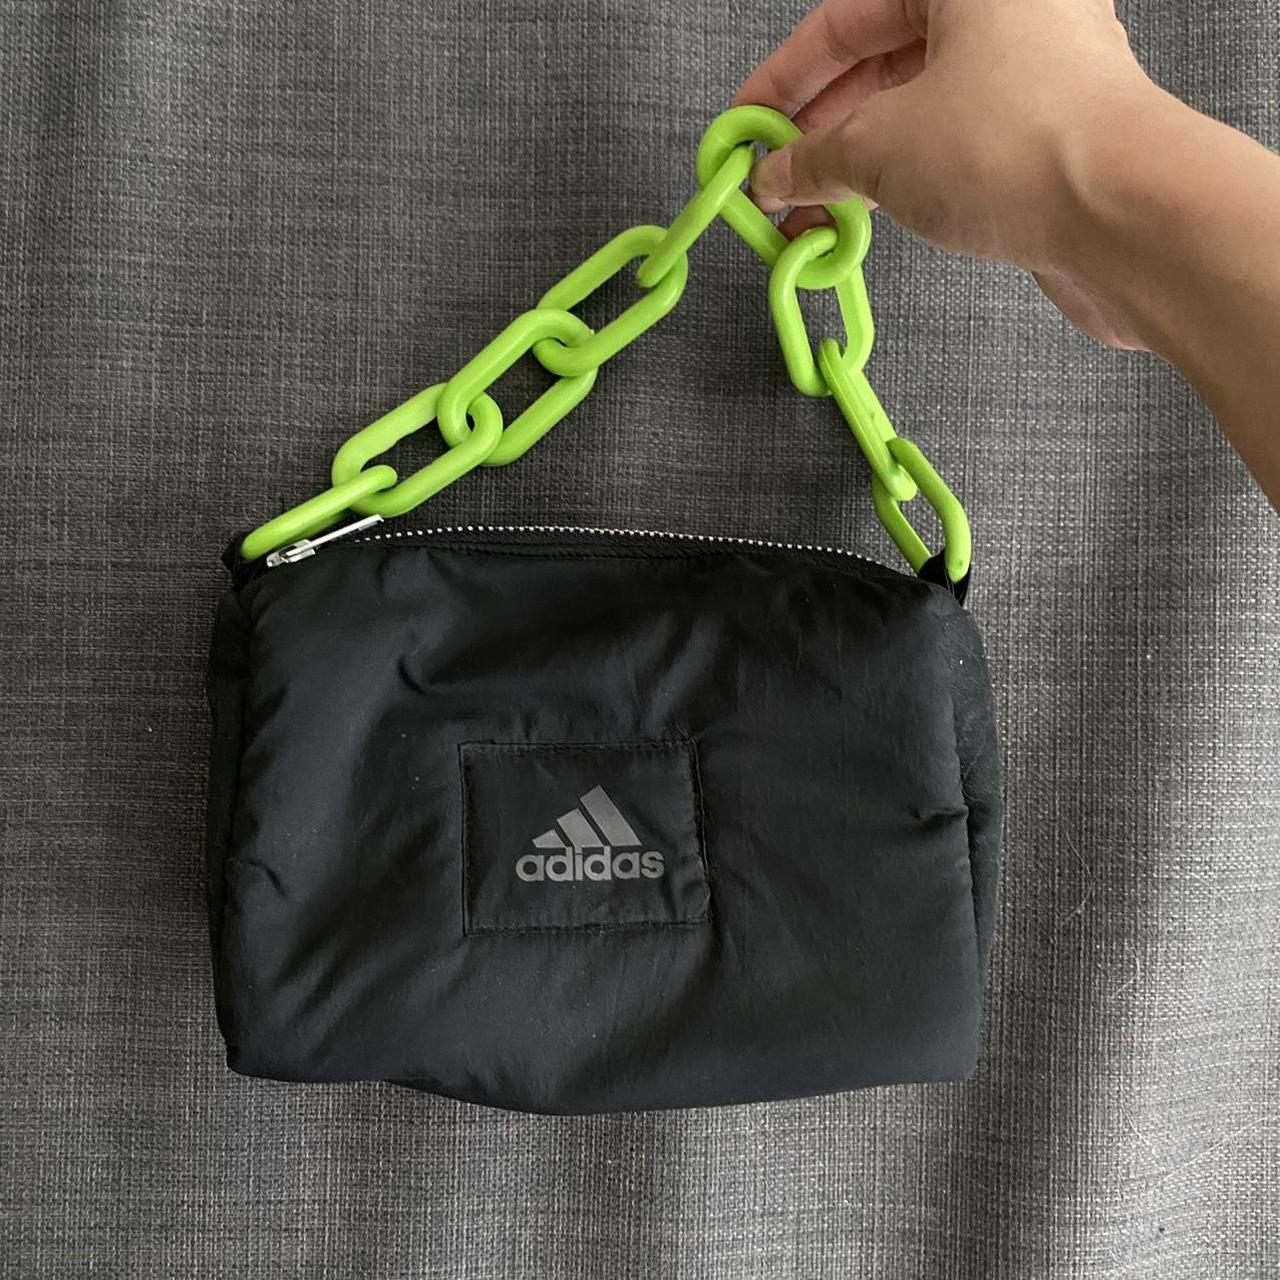 Adidas Women's Black and Green Bag